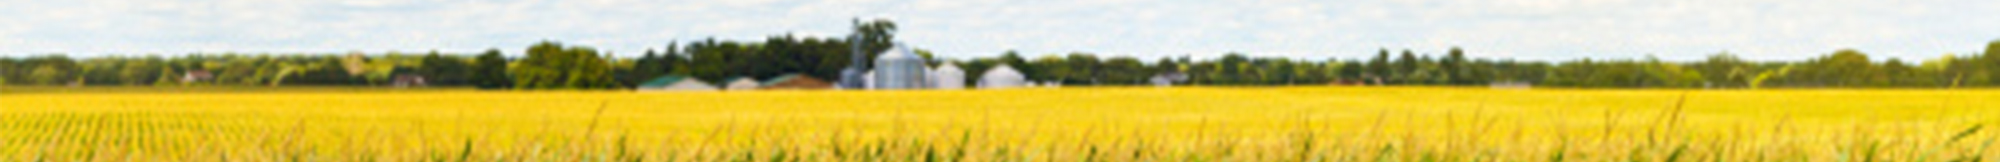 Crop field on a farm.